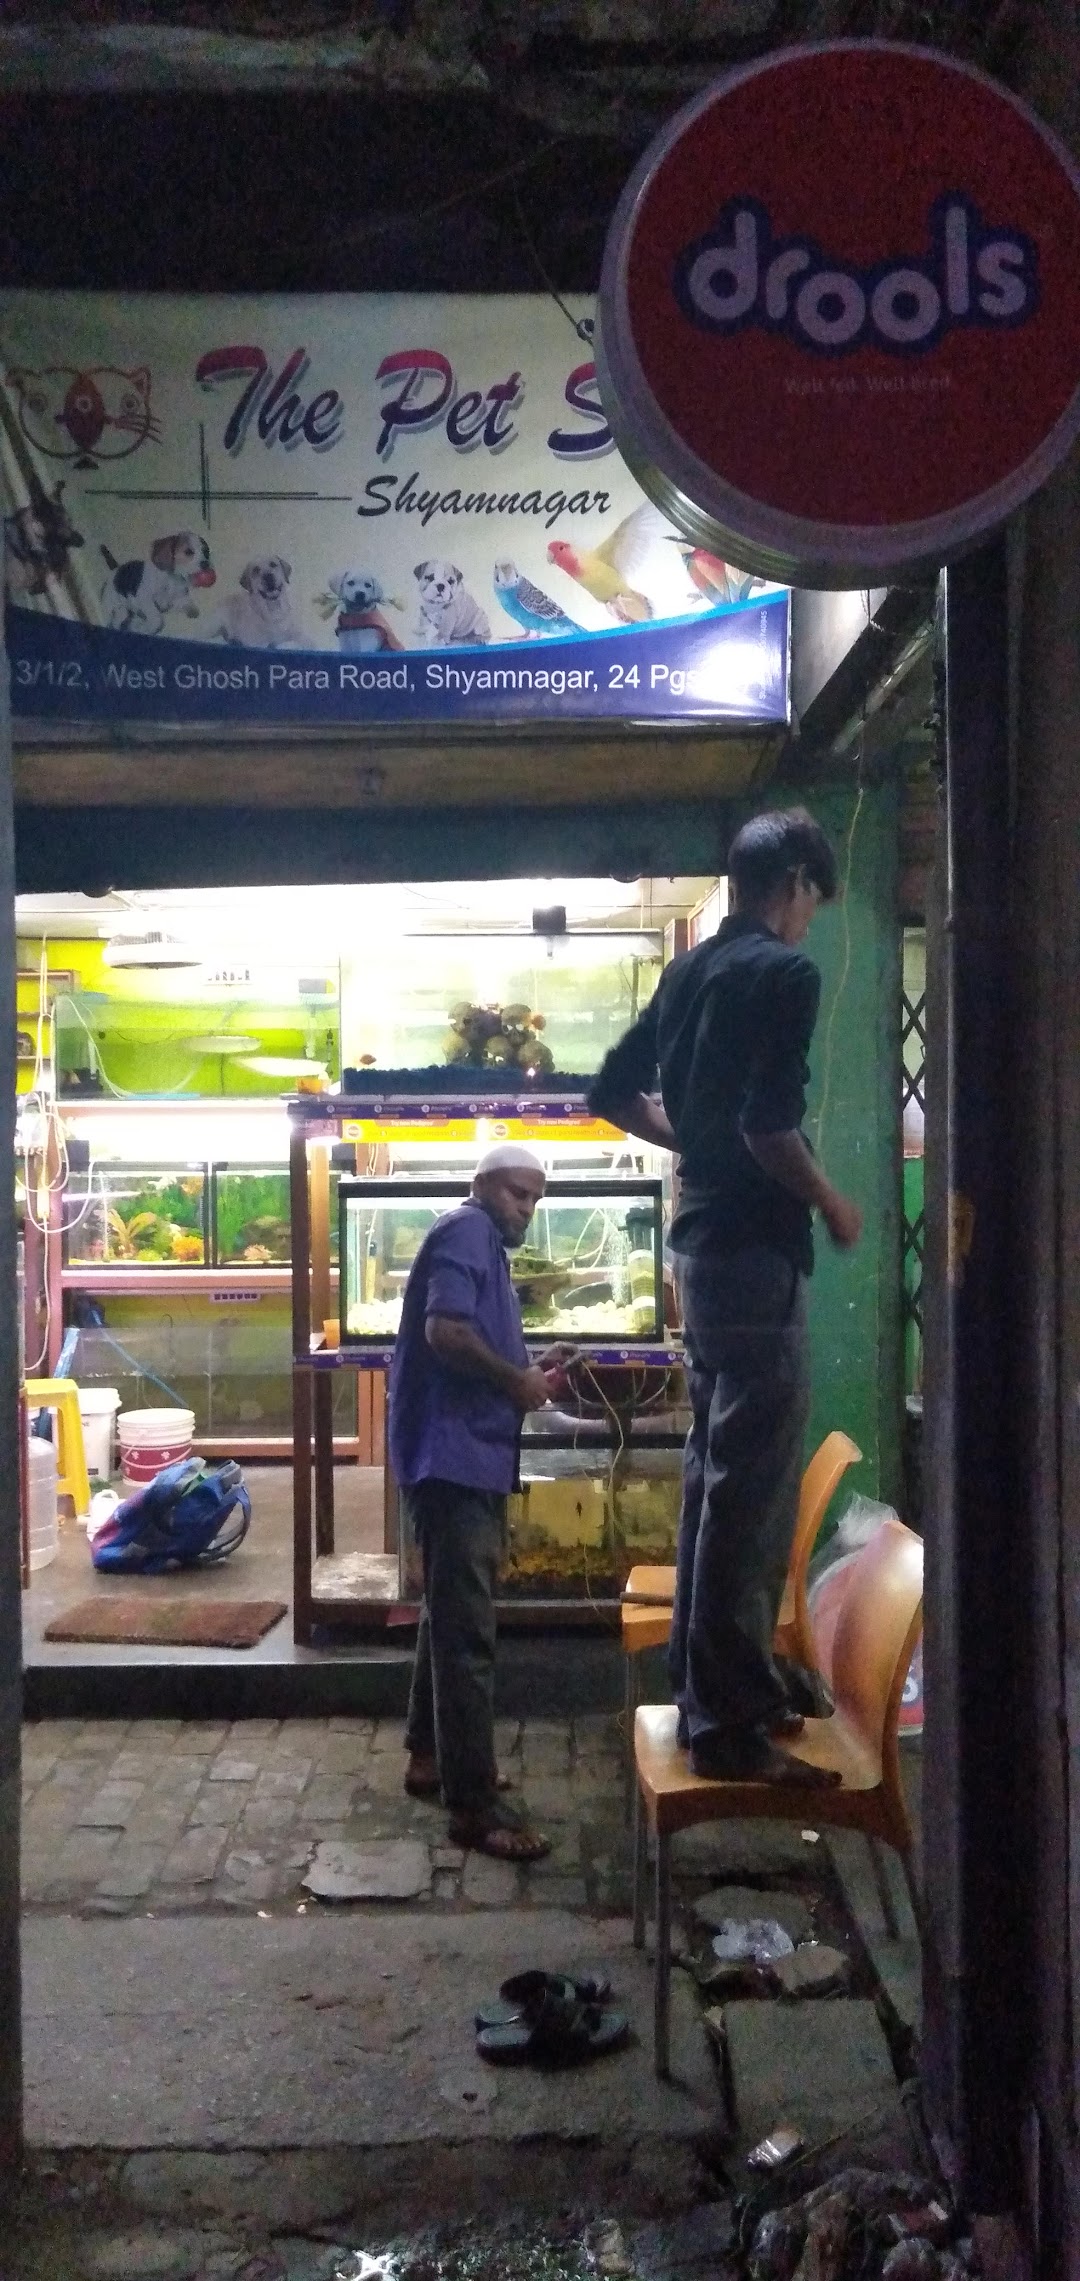 The Pet Shop - Shyamnagar